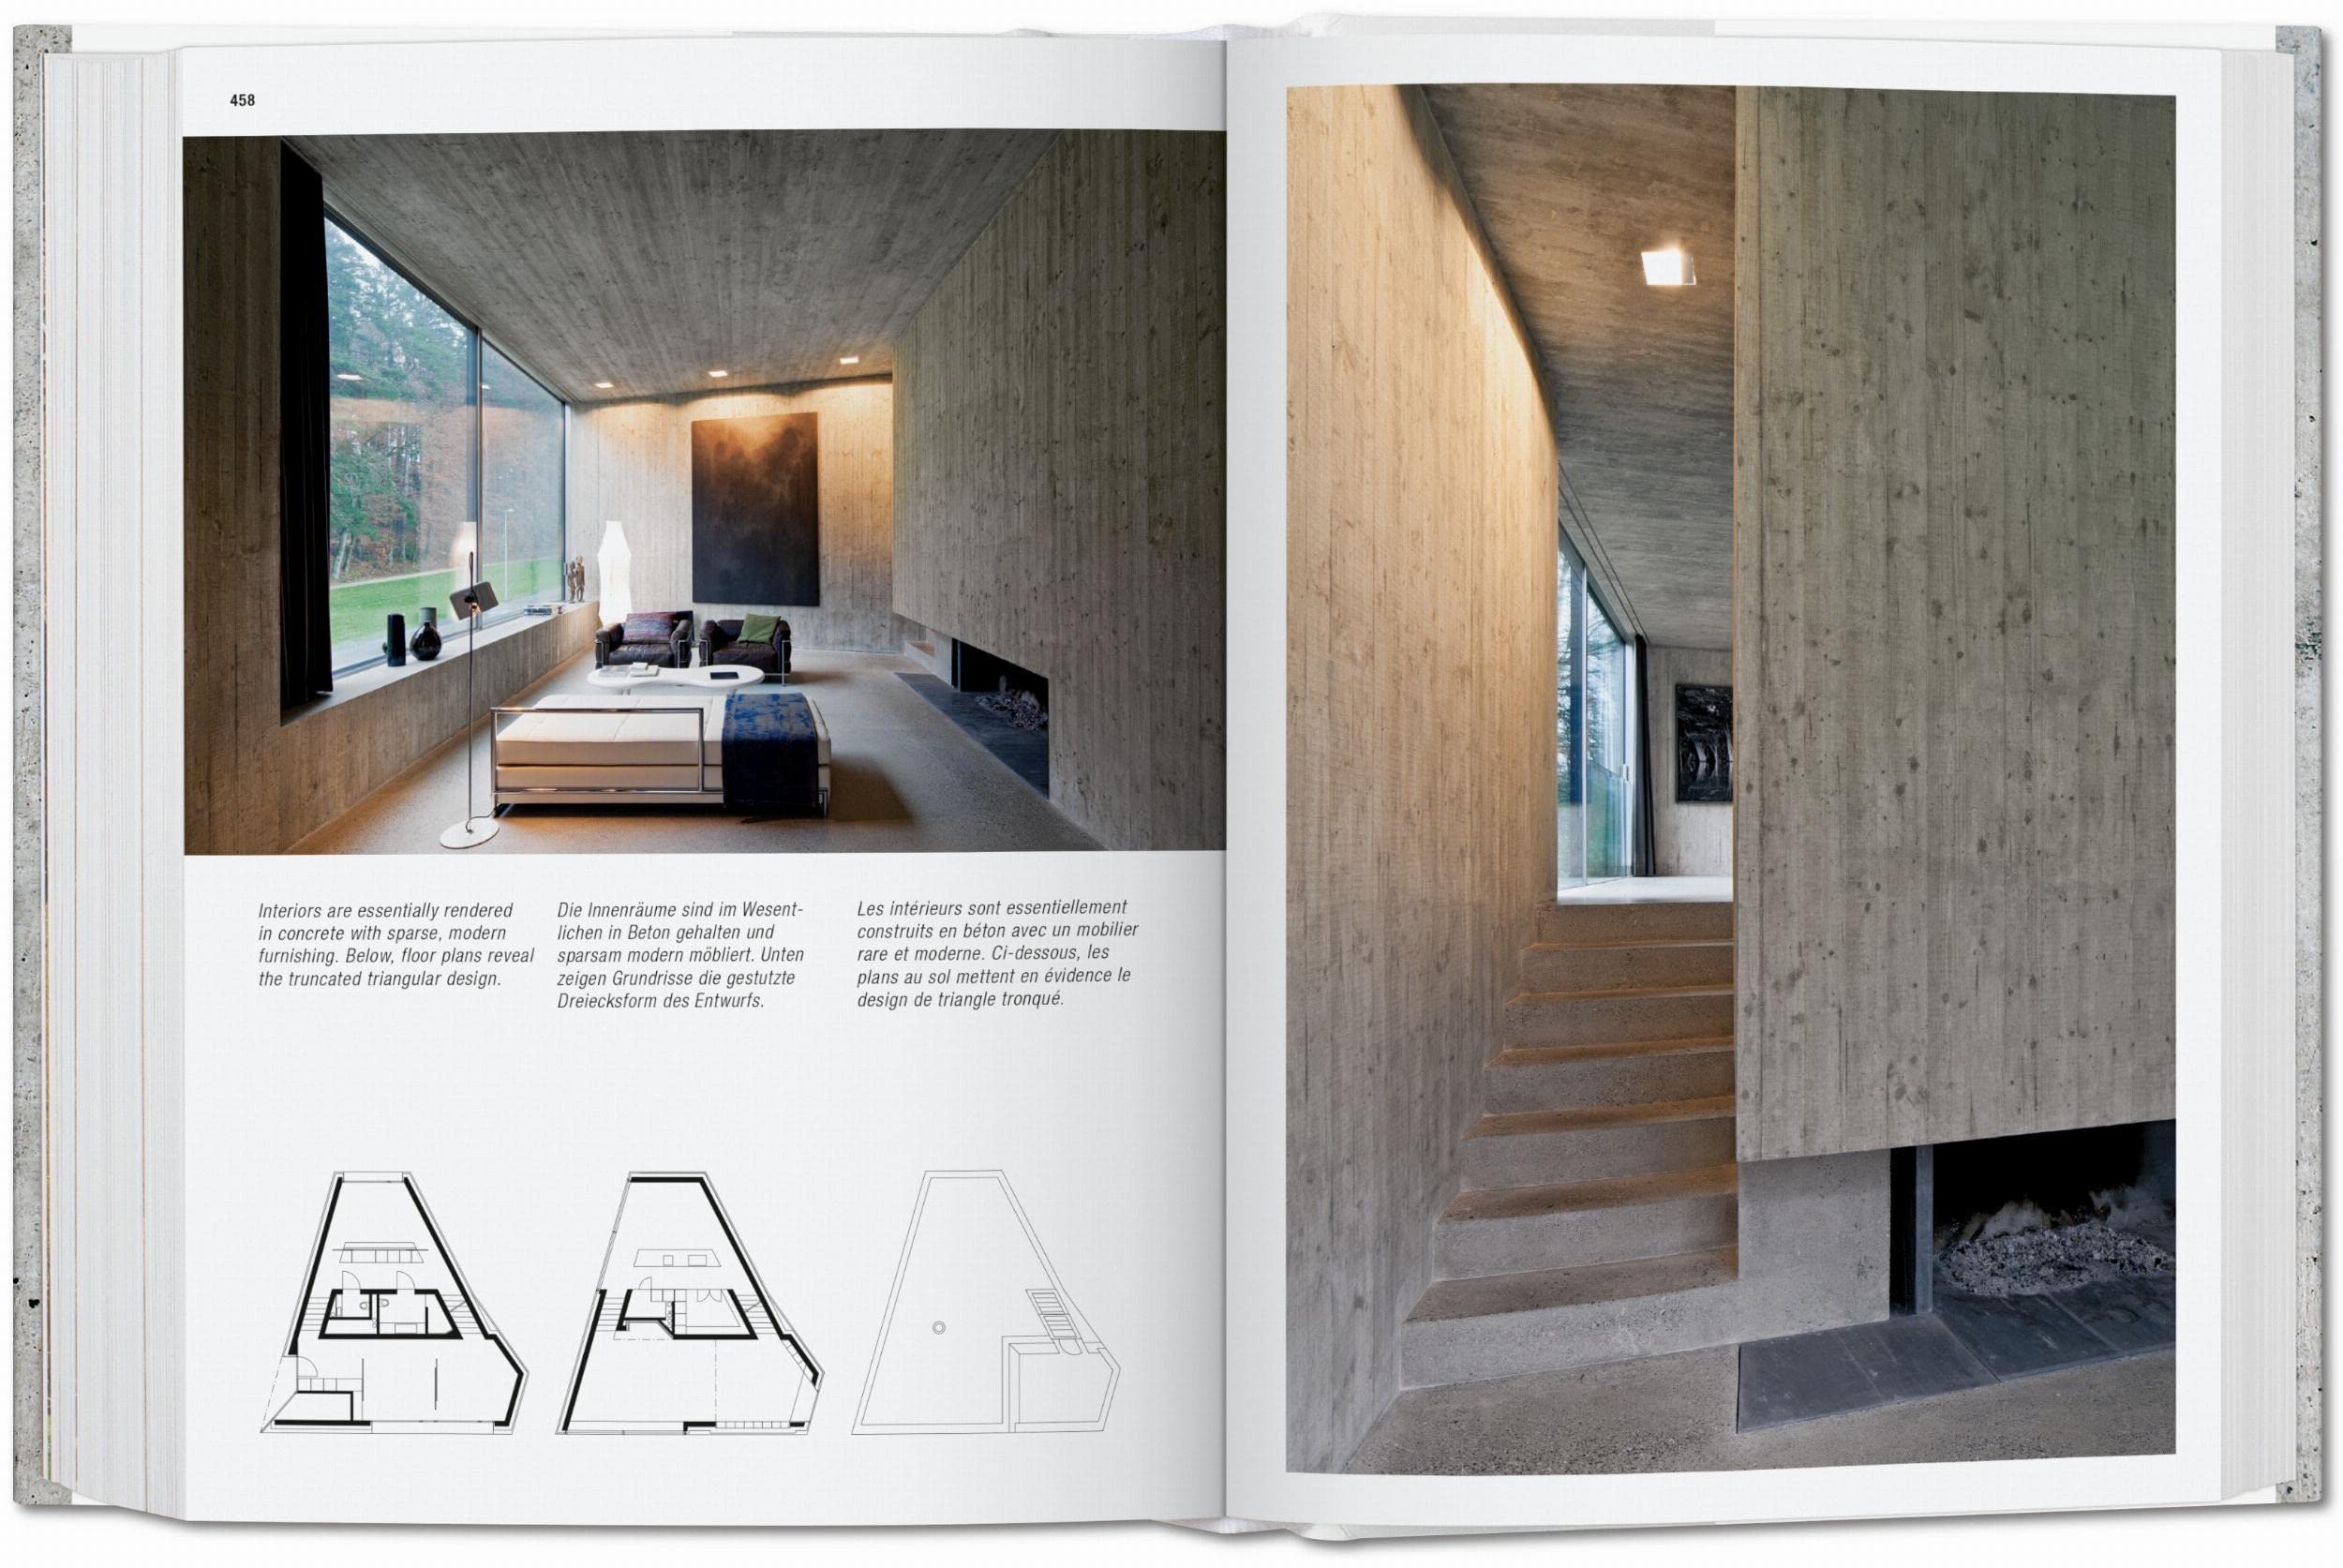 Contemporary Concrete Buildings / Zeitgenossische Bauten aus Beton / Batiments contemporains en beton